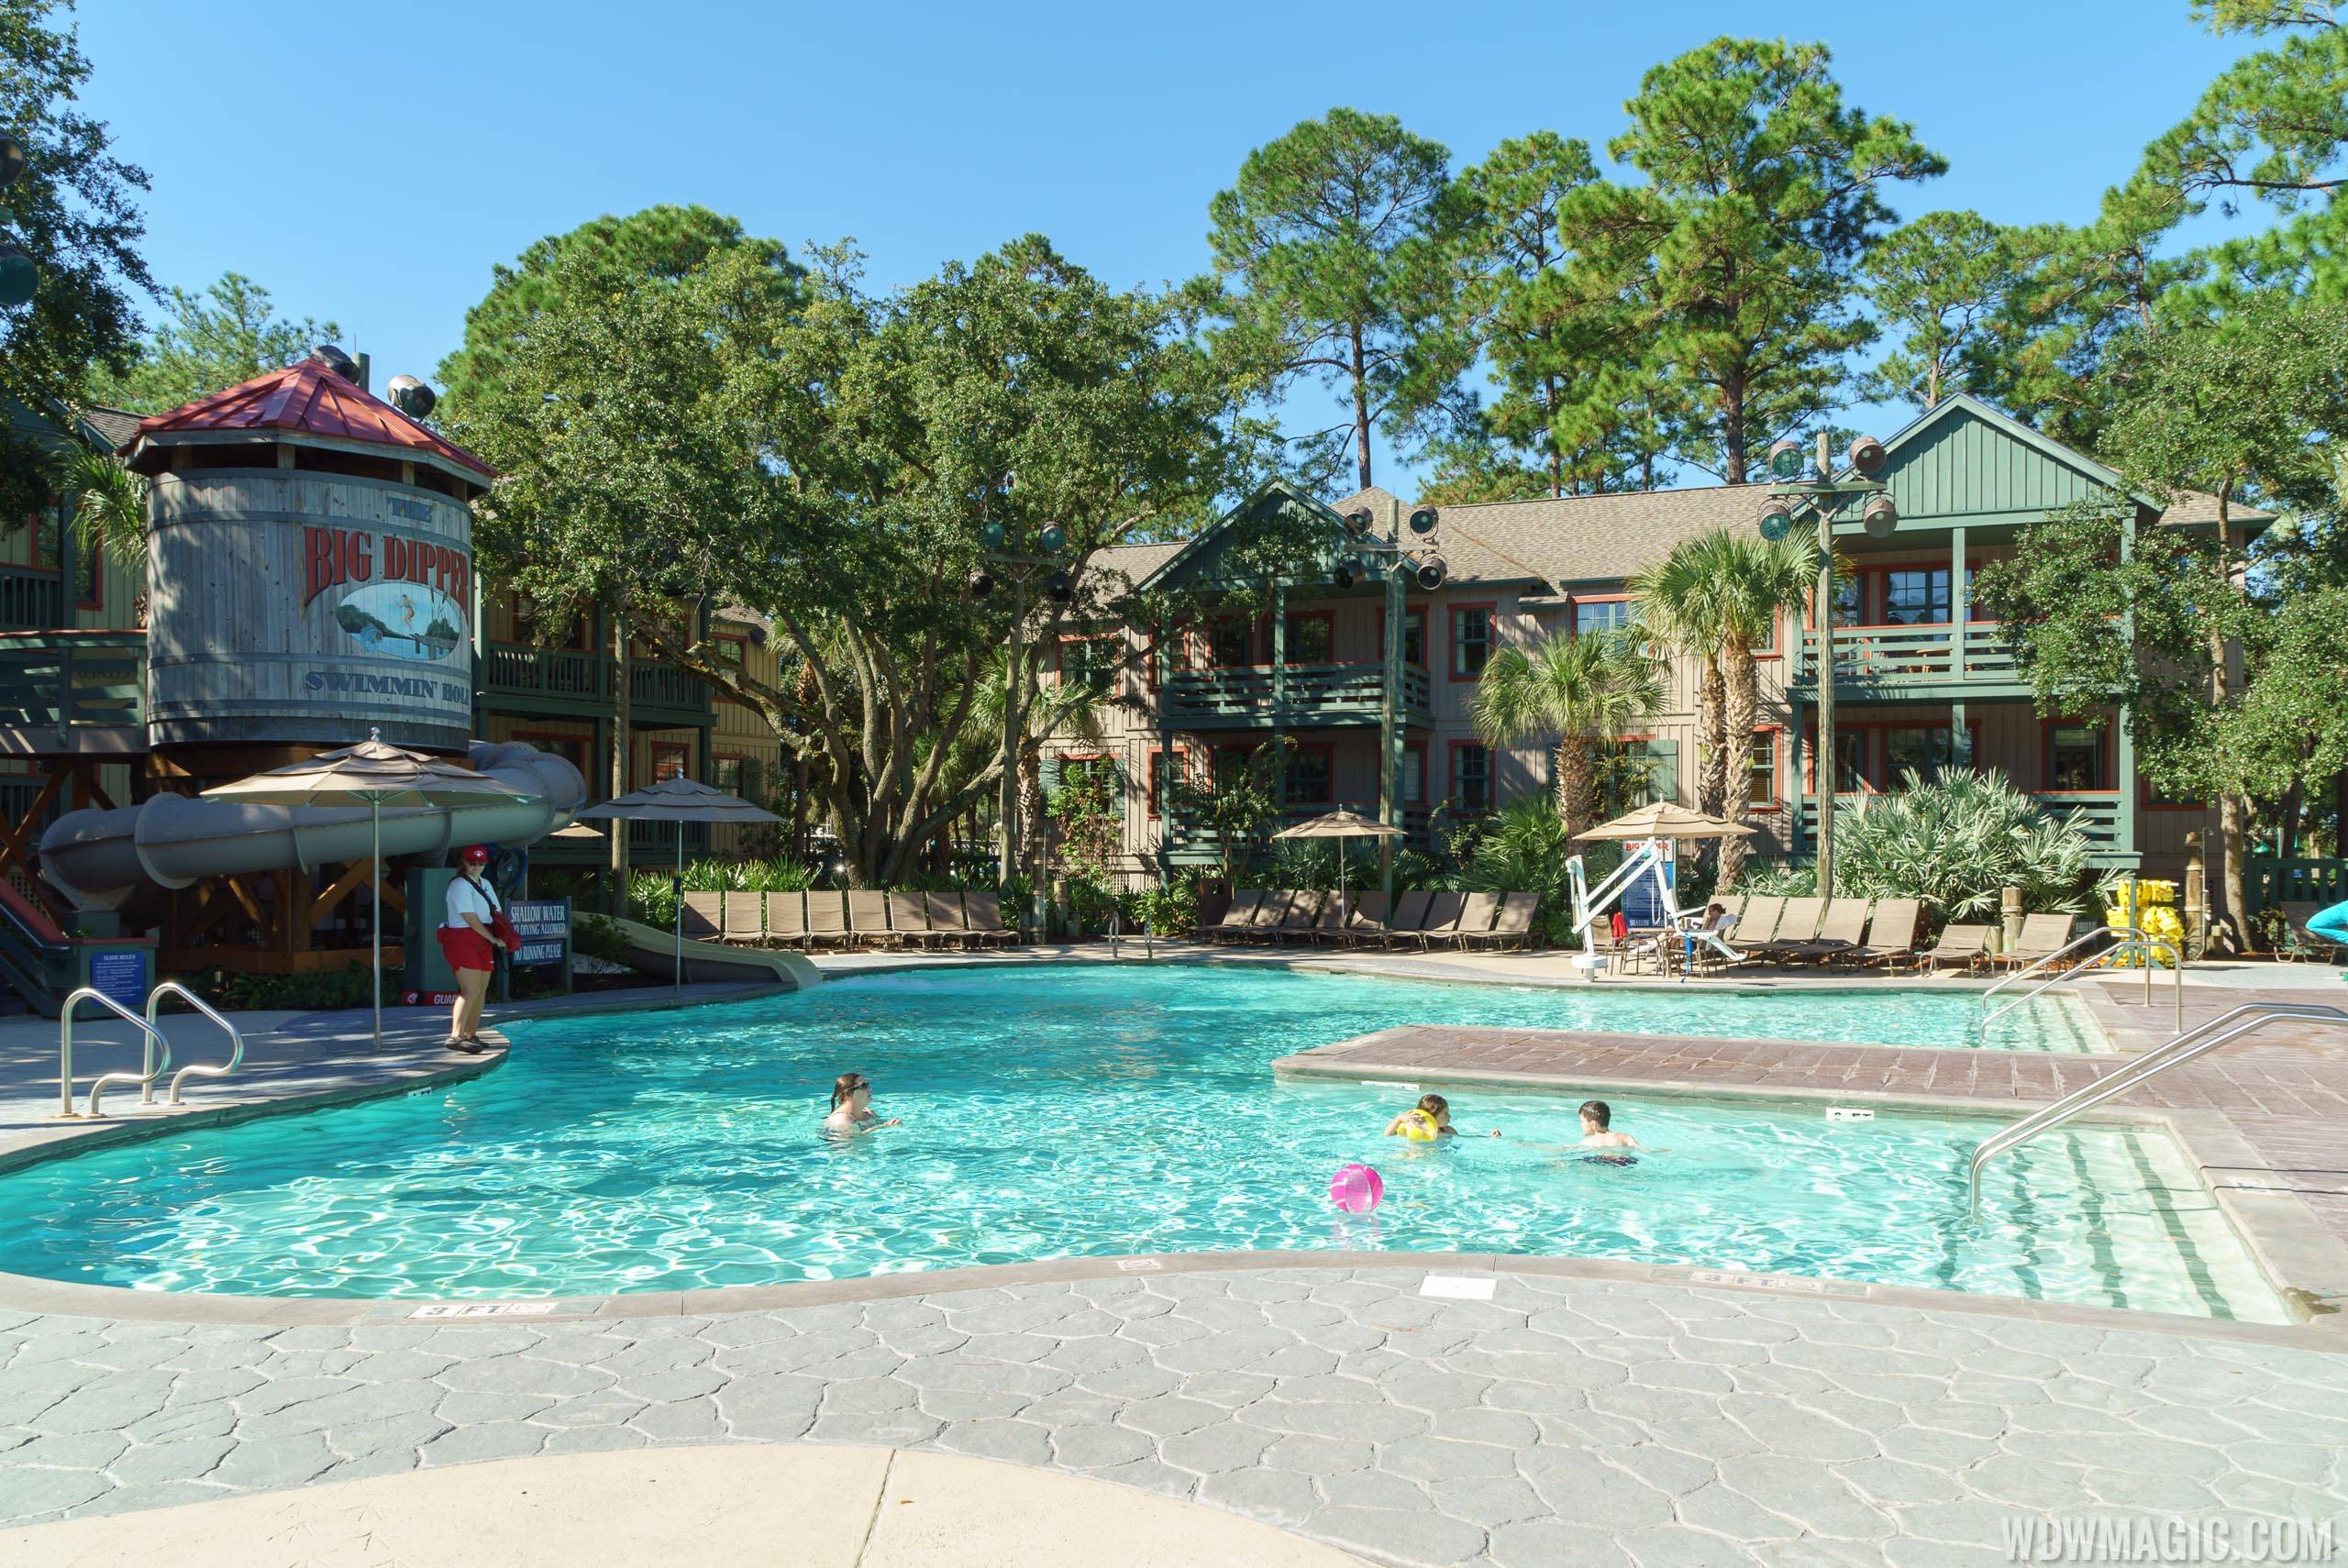 Disney's Hilton Head Island Resort - The Big Dipper pool area